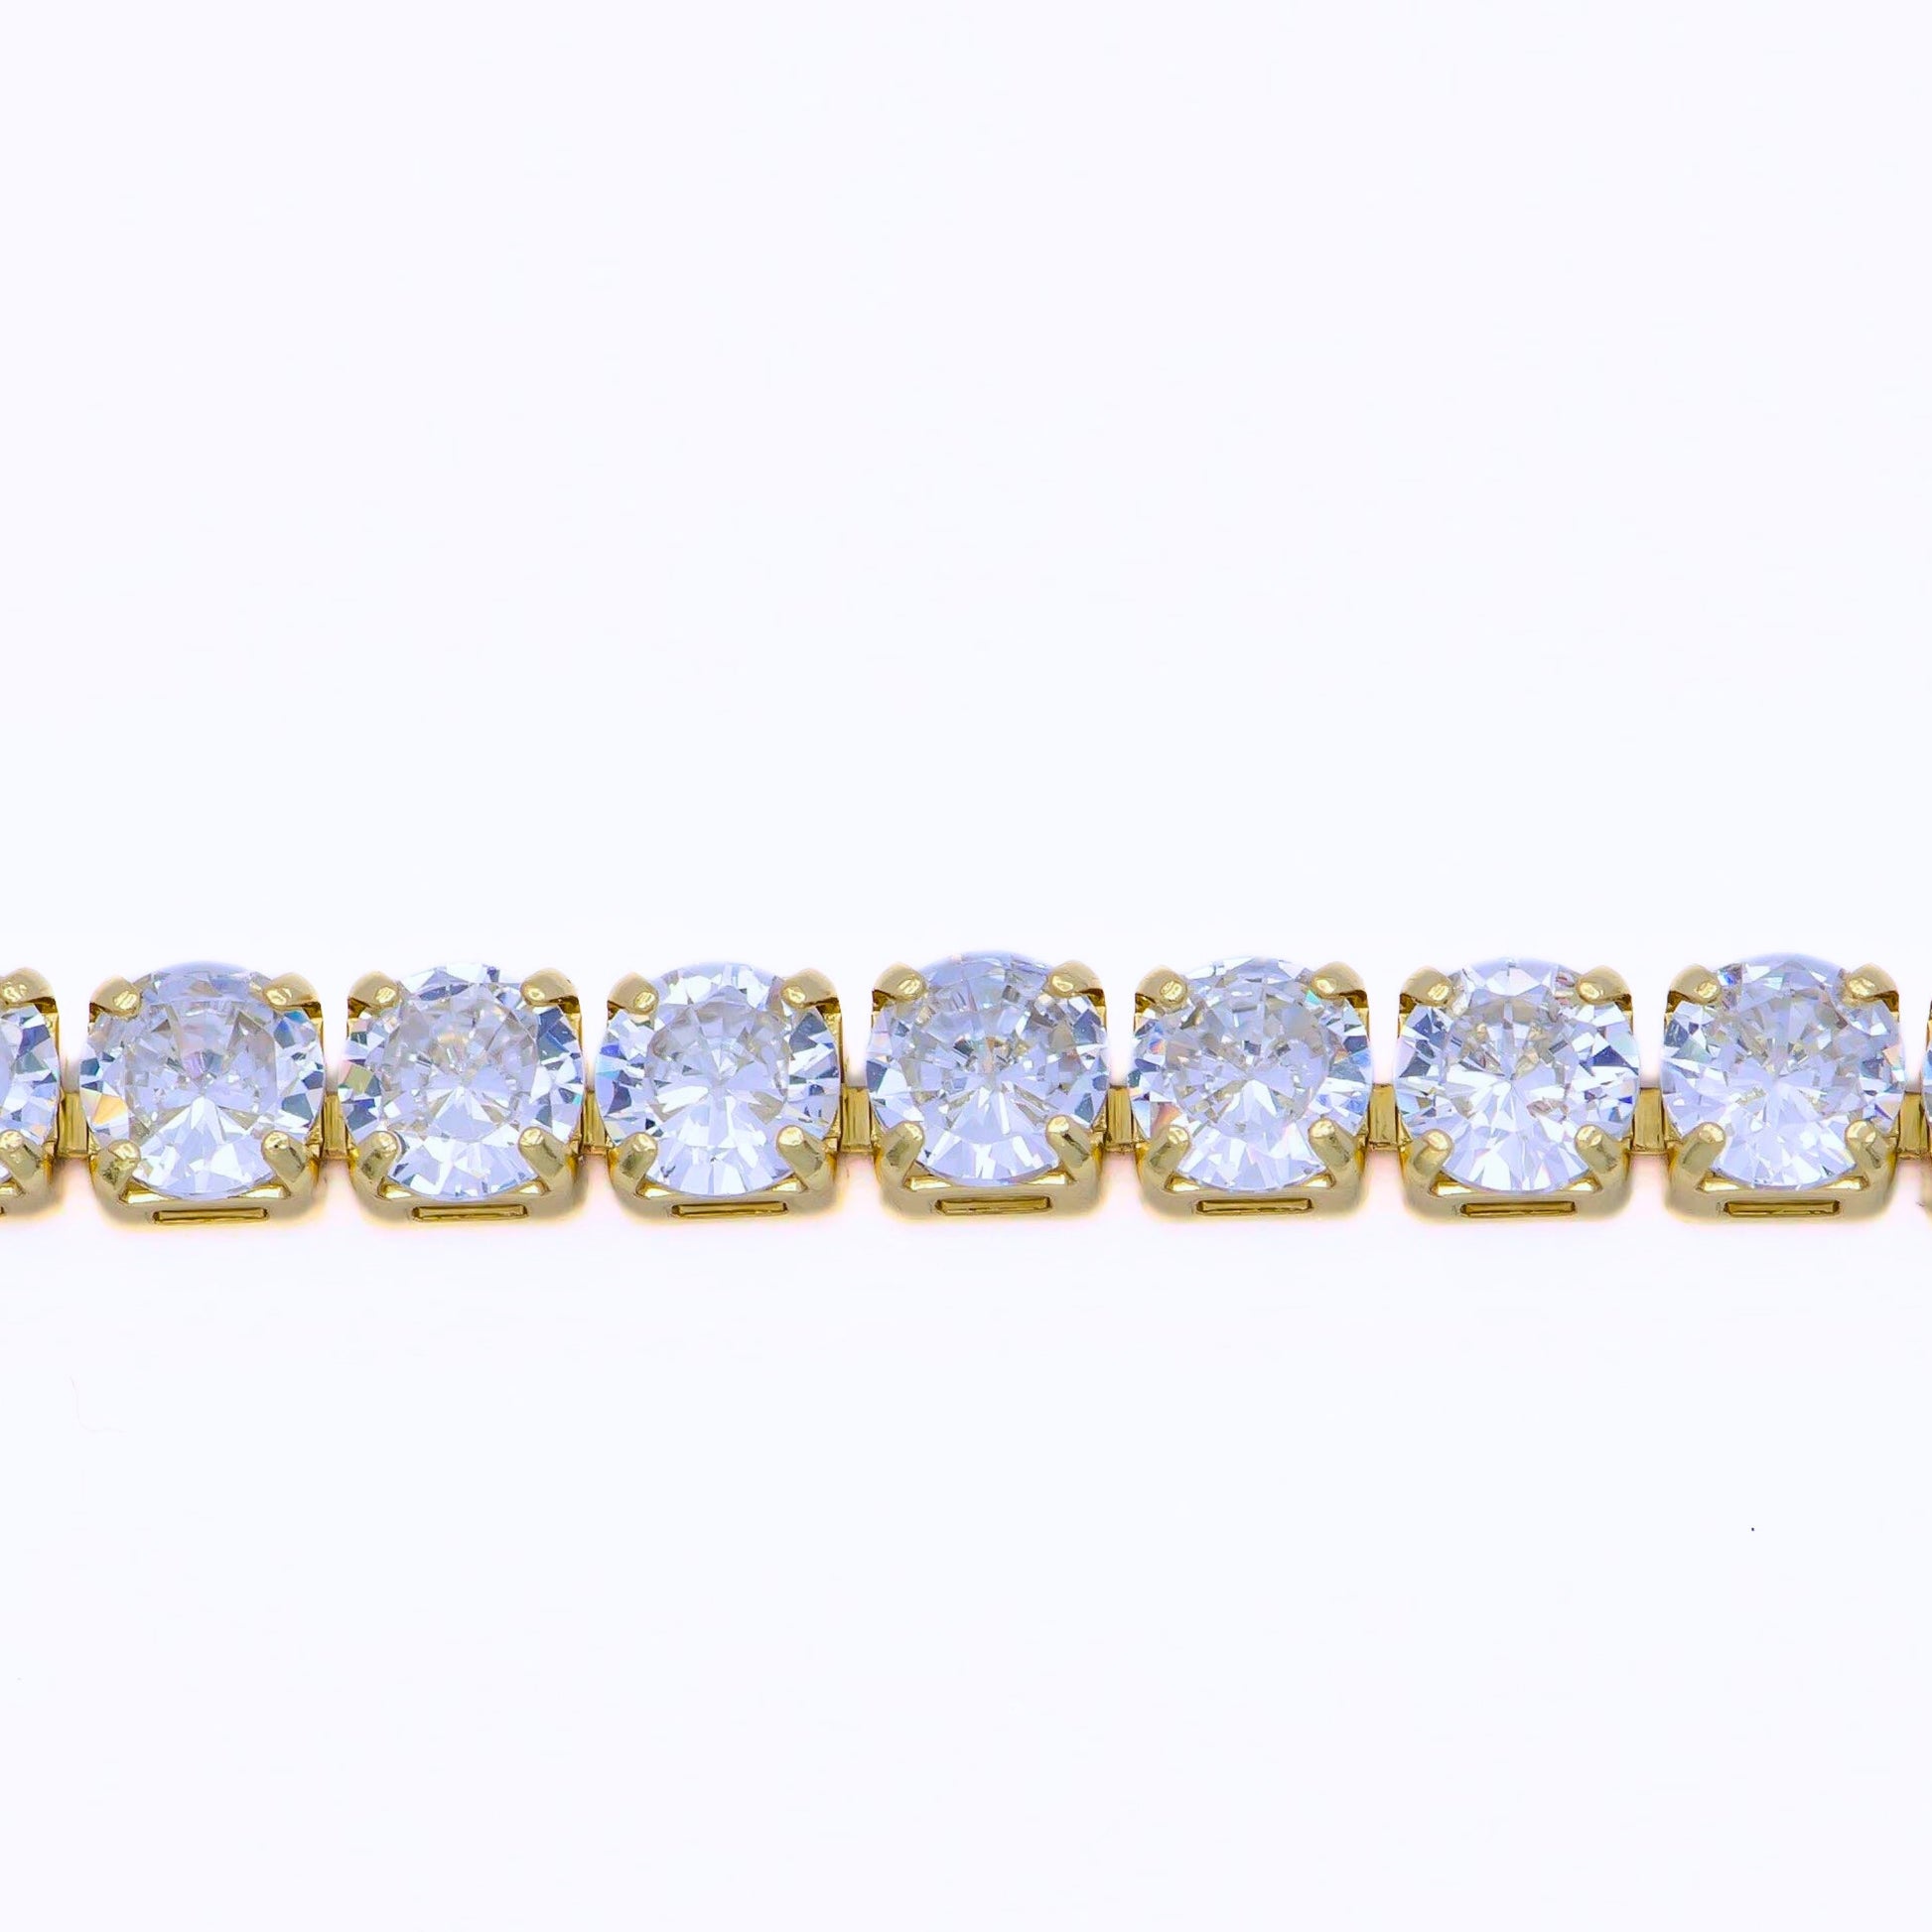 a yellow gold tennis bracelet with a row of CZ diamonds